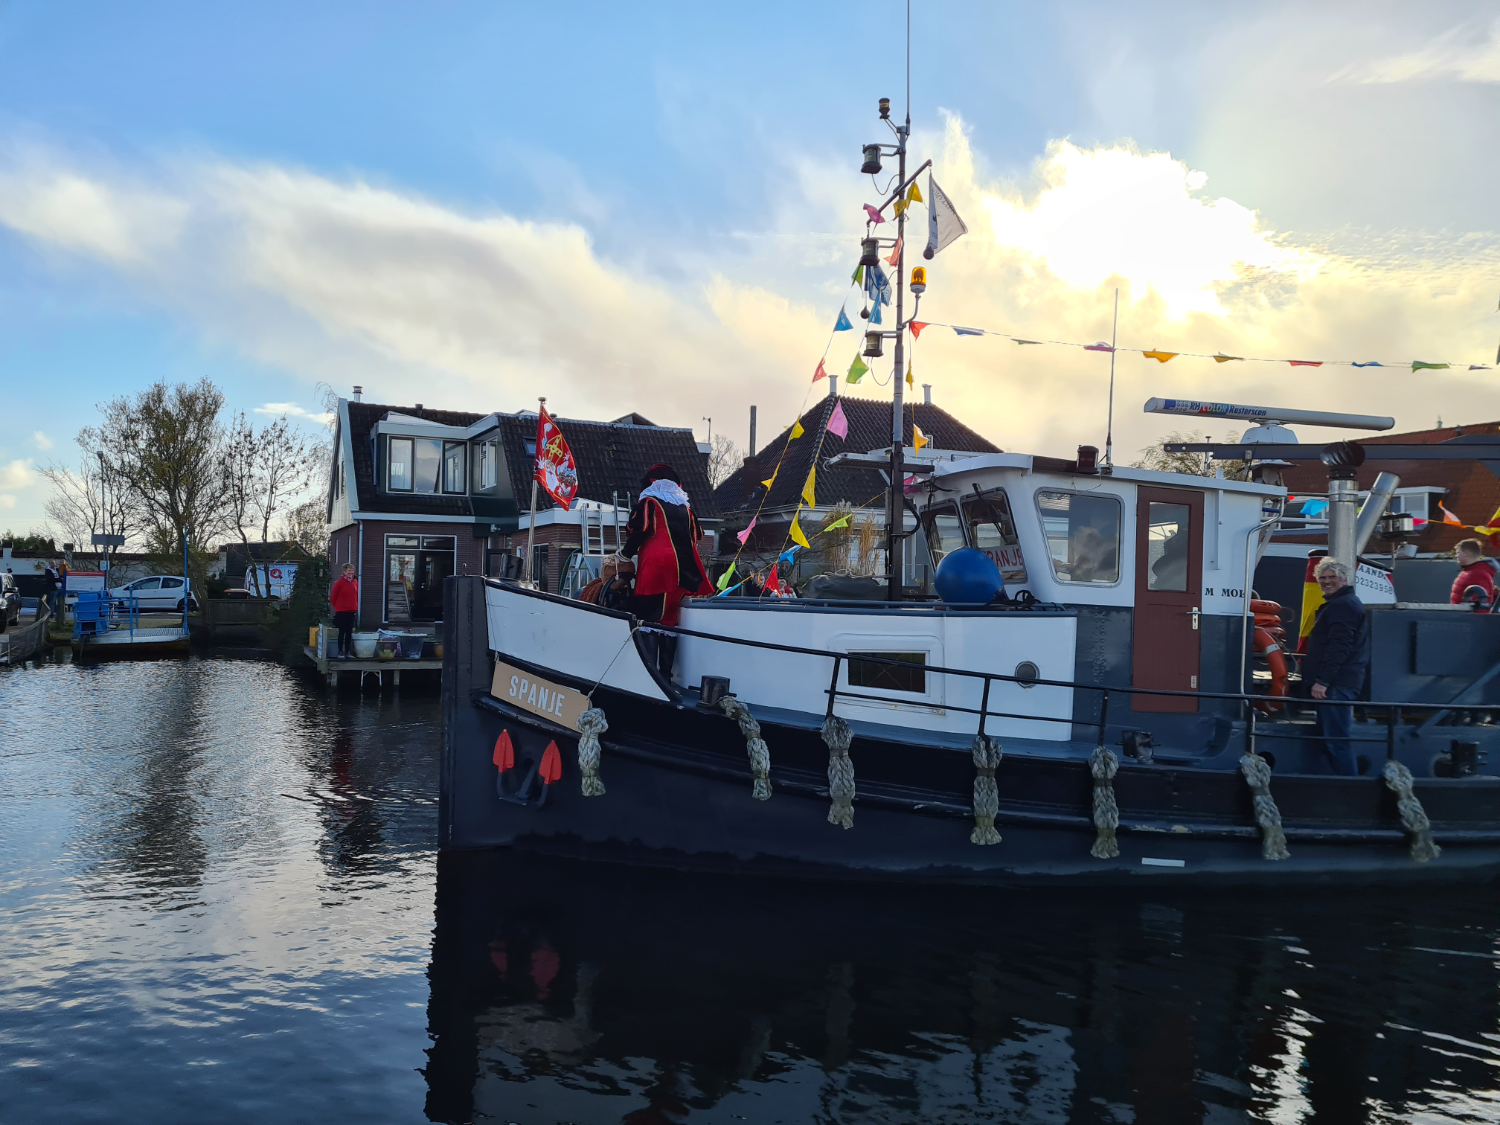 Sinterklaas on a boat